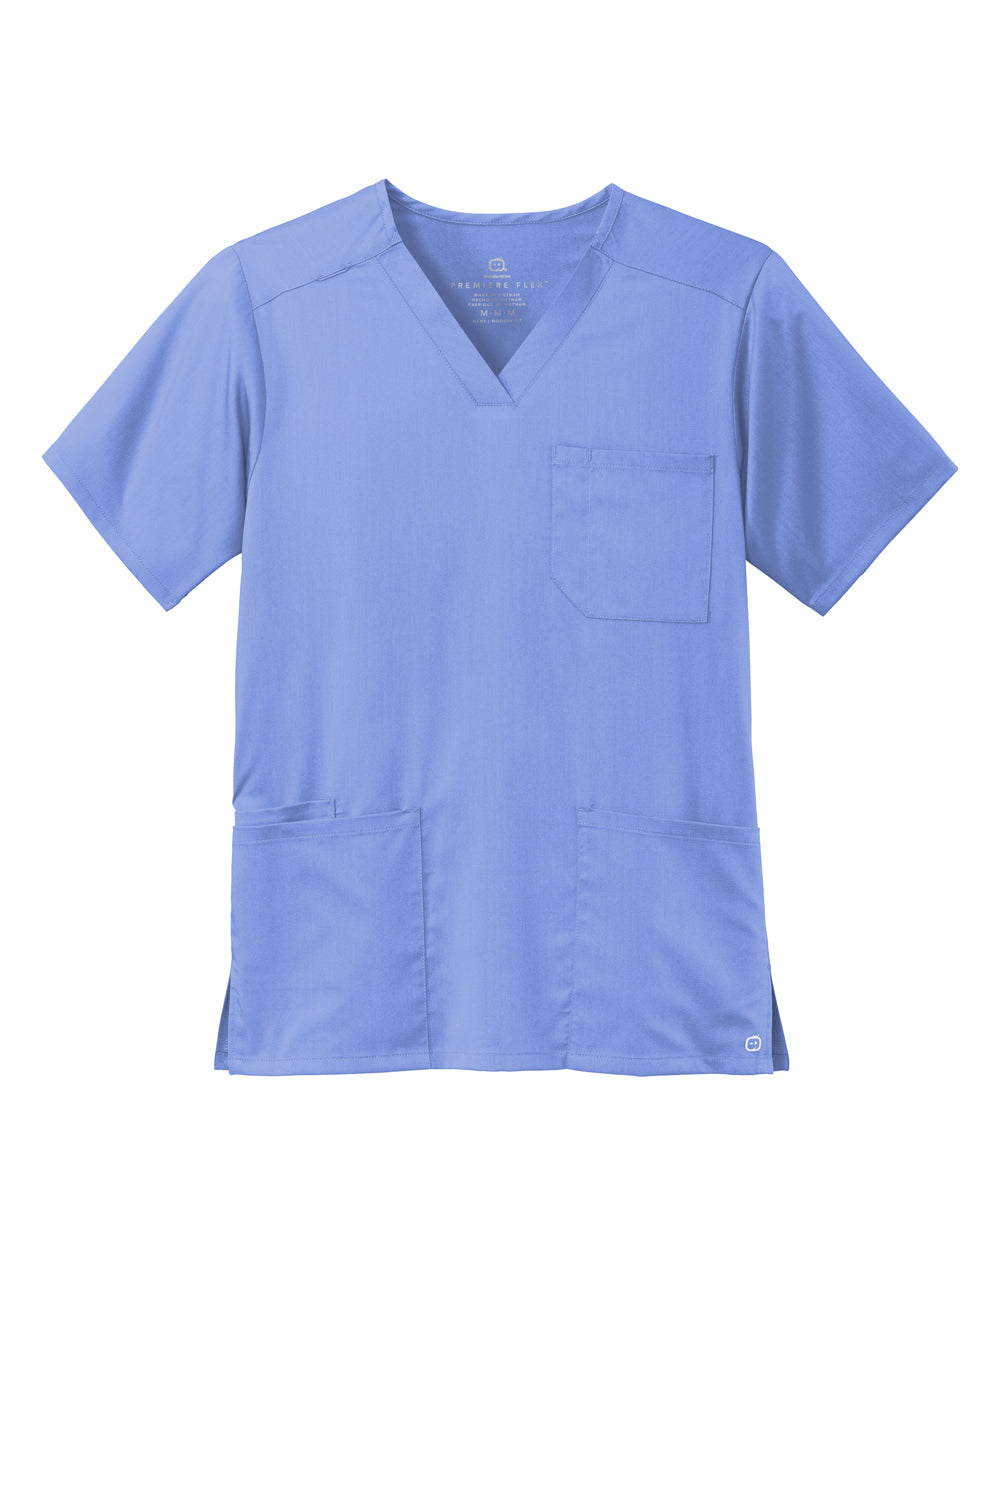 Wonderwink WW5068 Premiere Flex Short Sleeve V-Neck Shirt Ceil Blue Flat Front